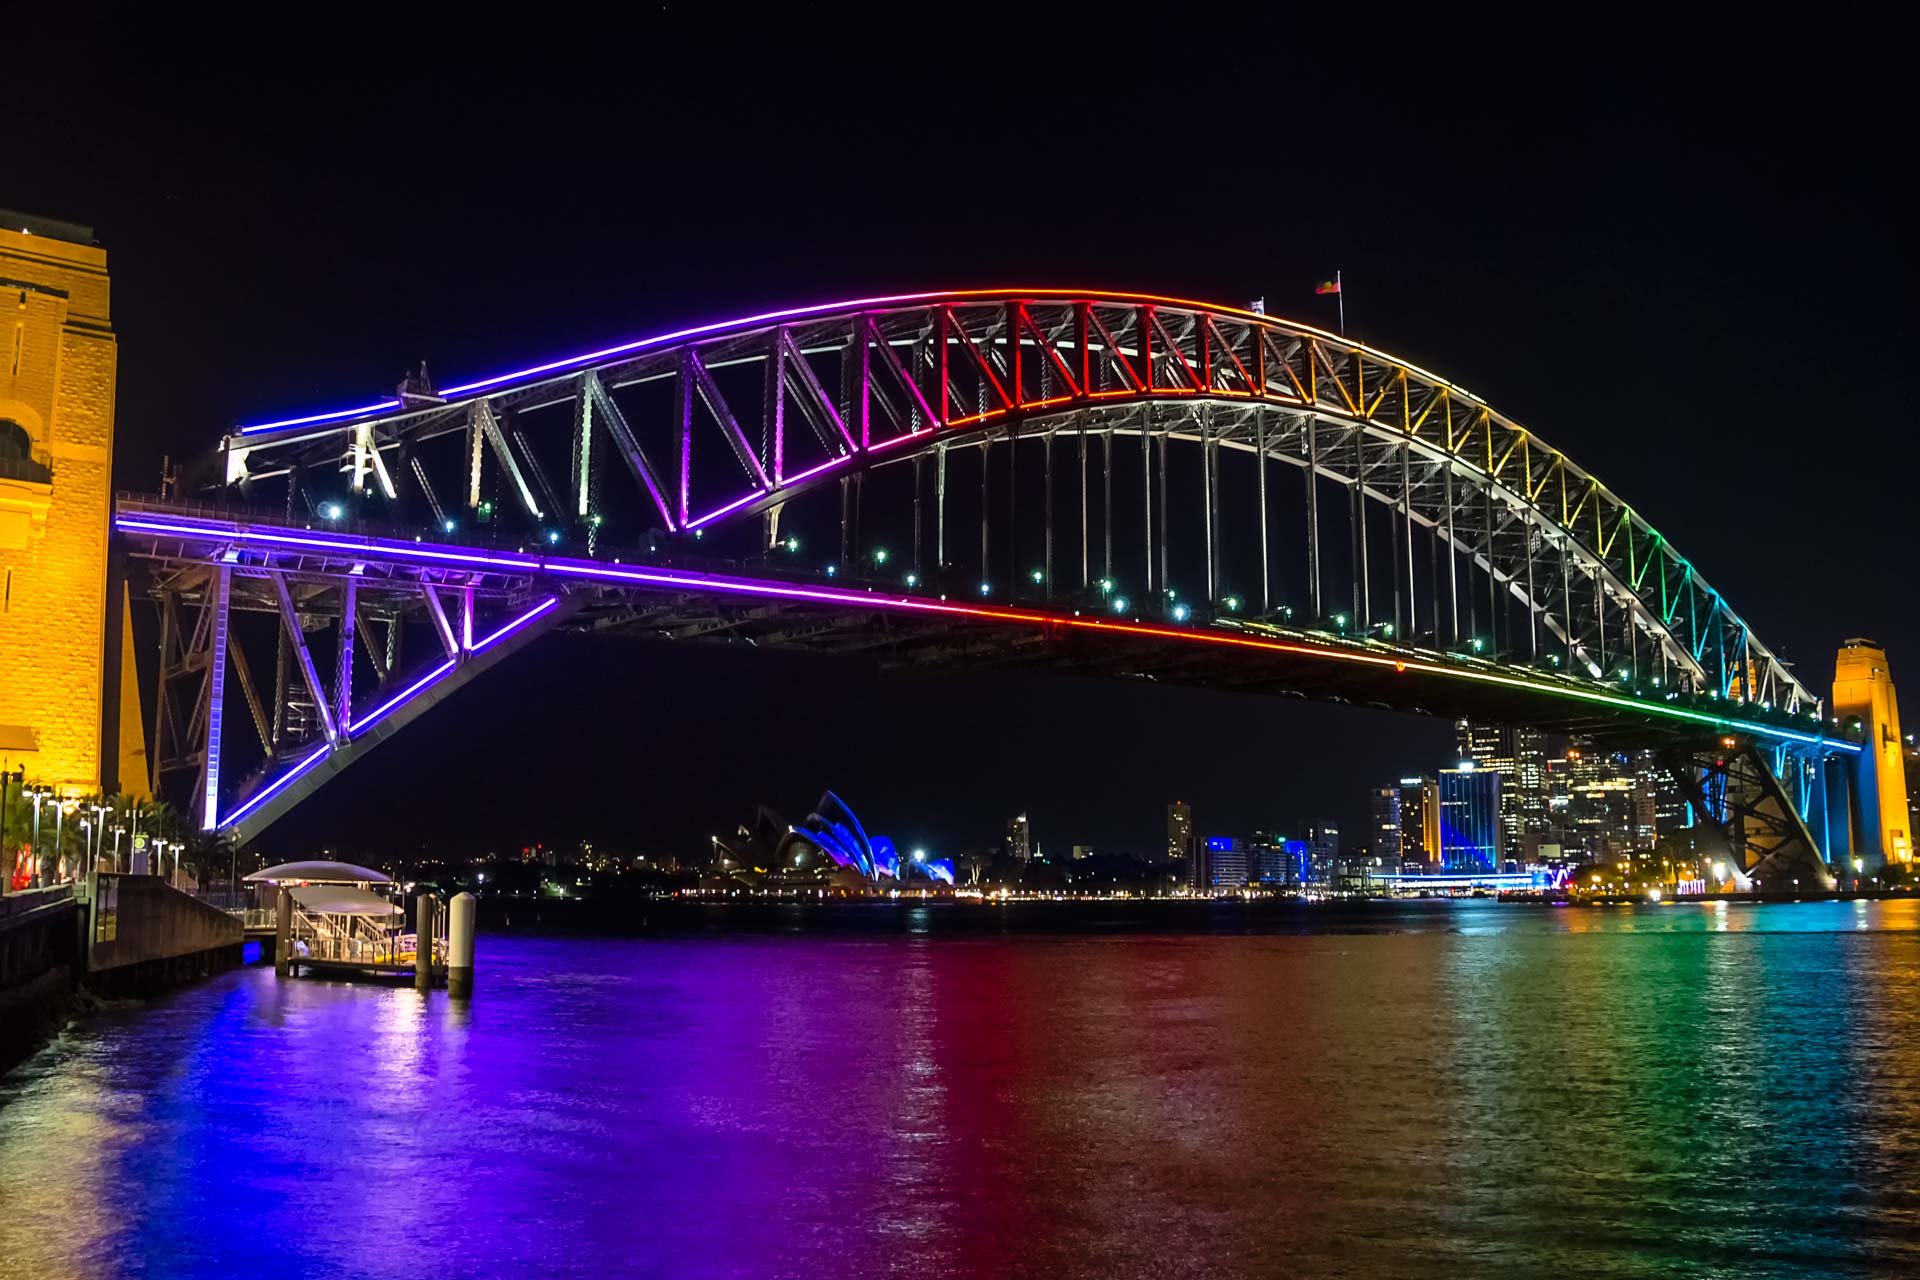 Harbour bridge. Мост Харбор-бридж в Сиднее. Мост Харбор бридж в Австралии. Сиднейский арочный мост Харбор-бридж.. Харбор-бридж (Сидней, Австралия).